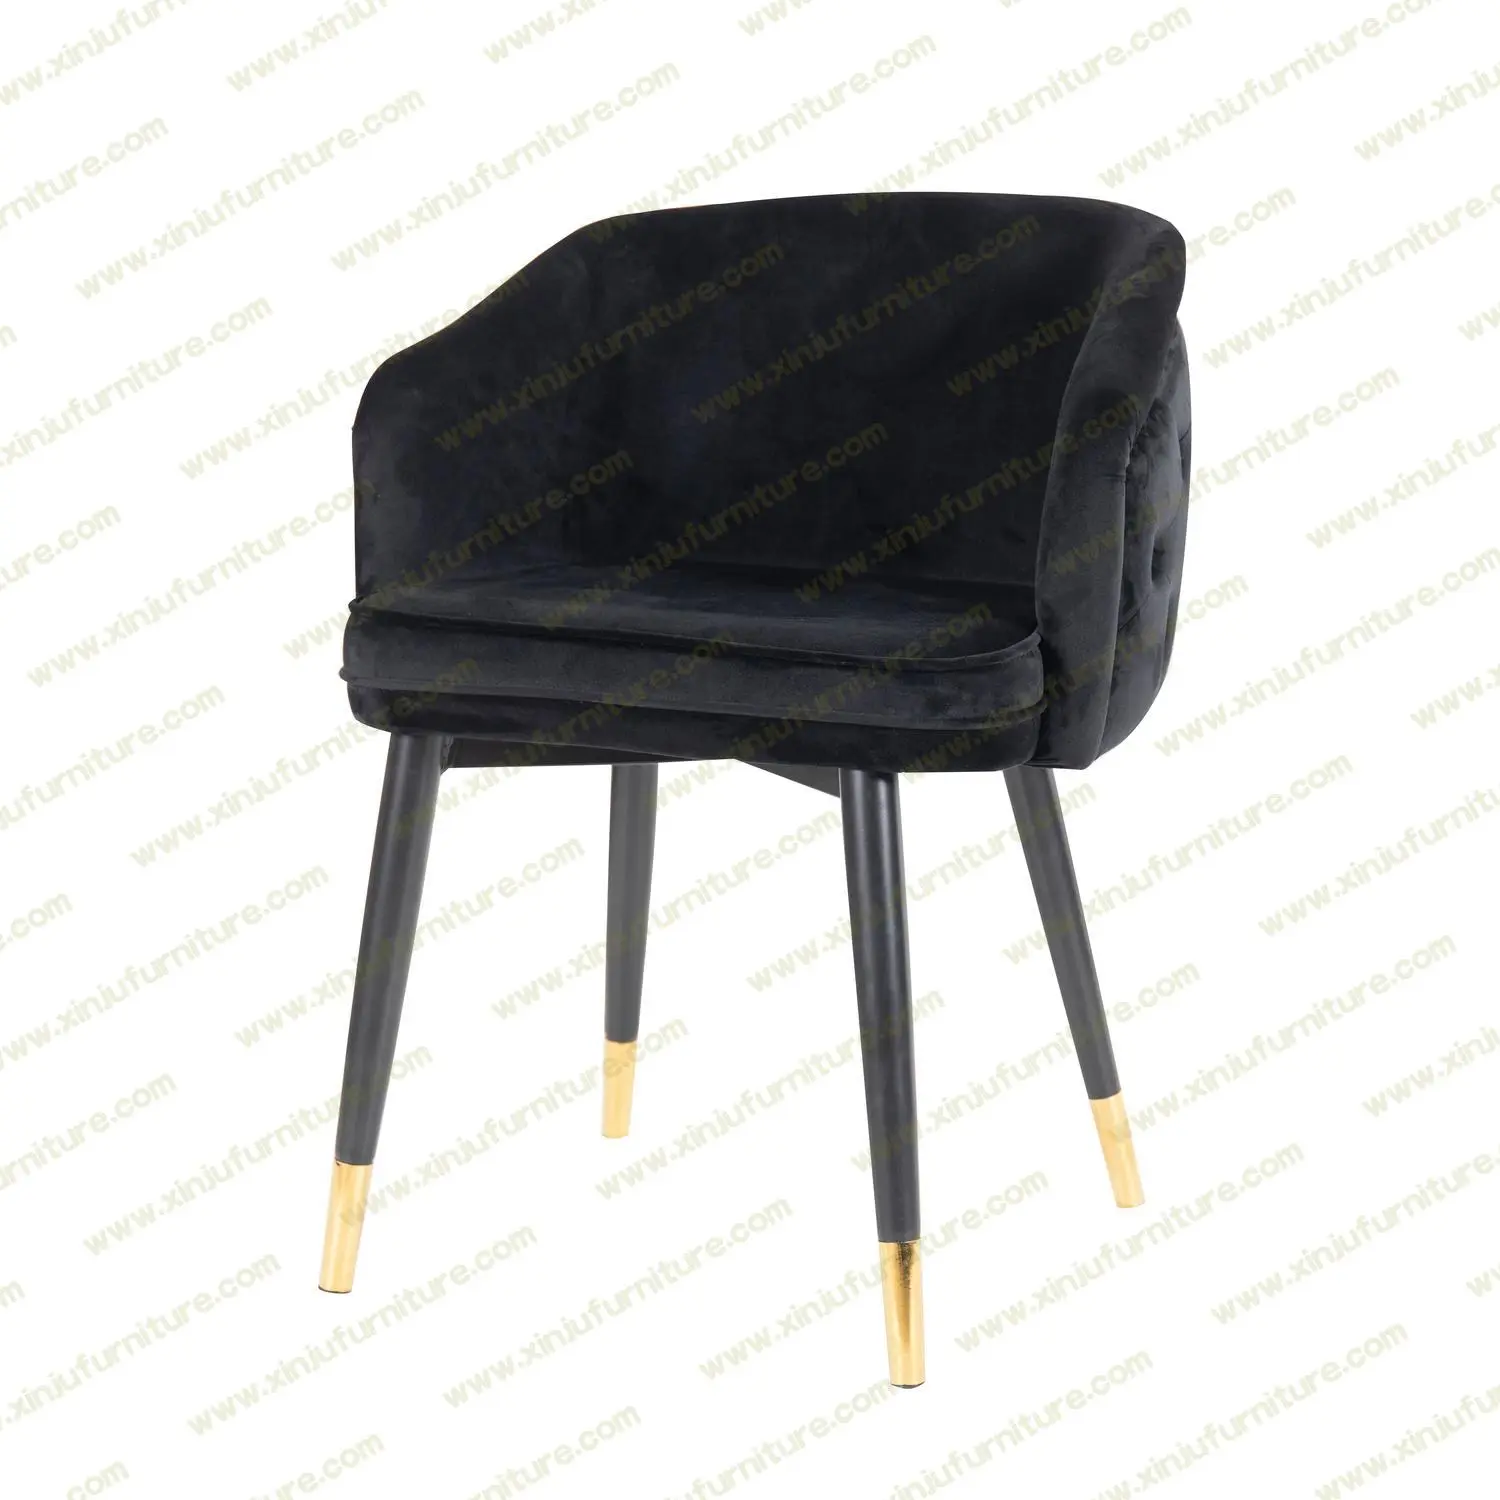 Dining chair for black high-end household Restaurant